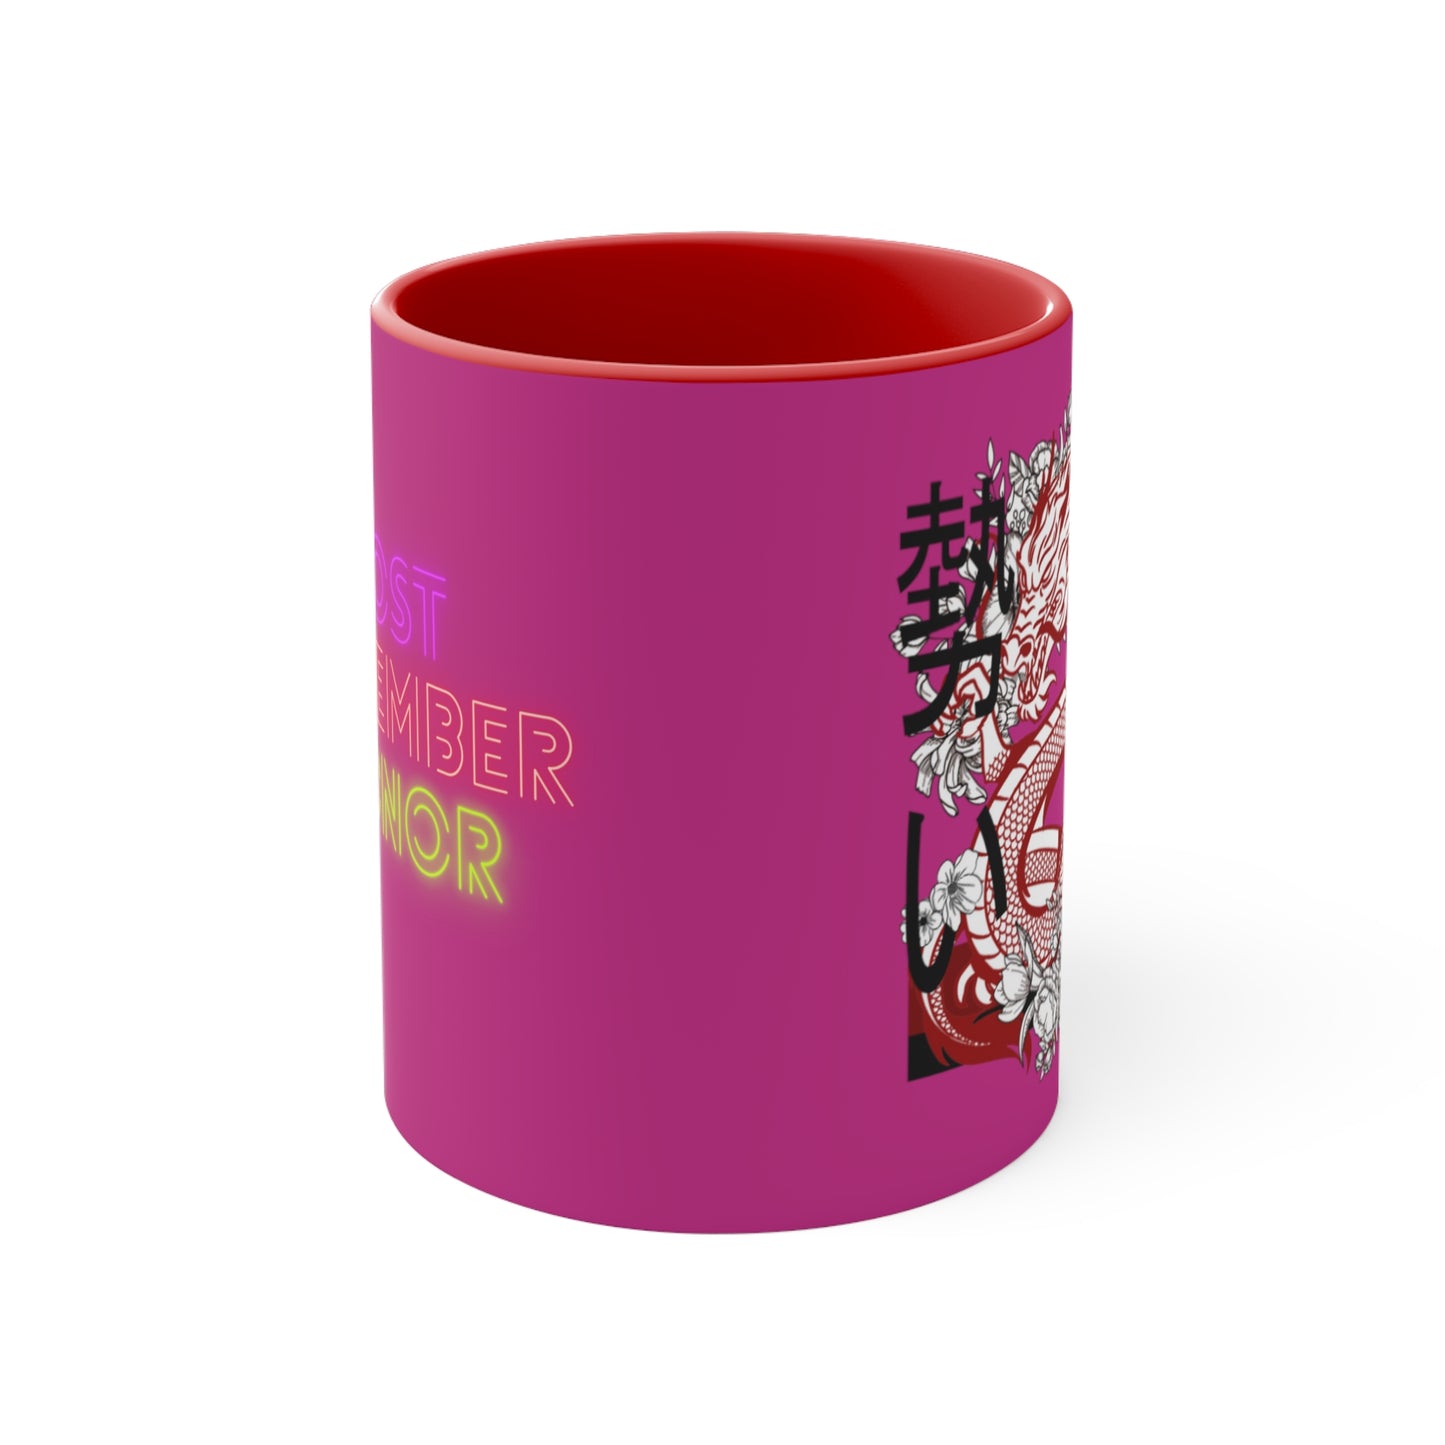 Accent Coffee Mug, 11oz: Dragons Pink